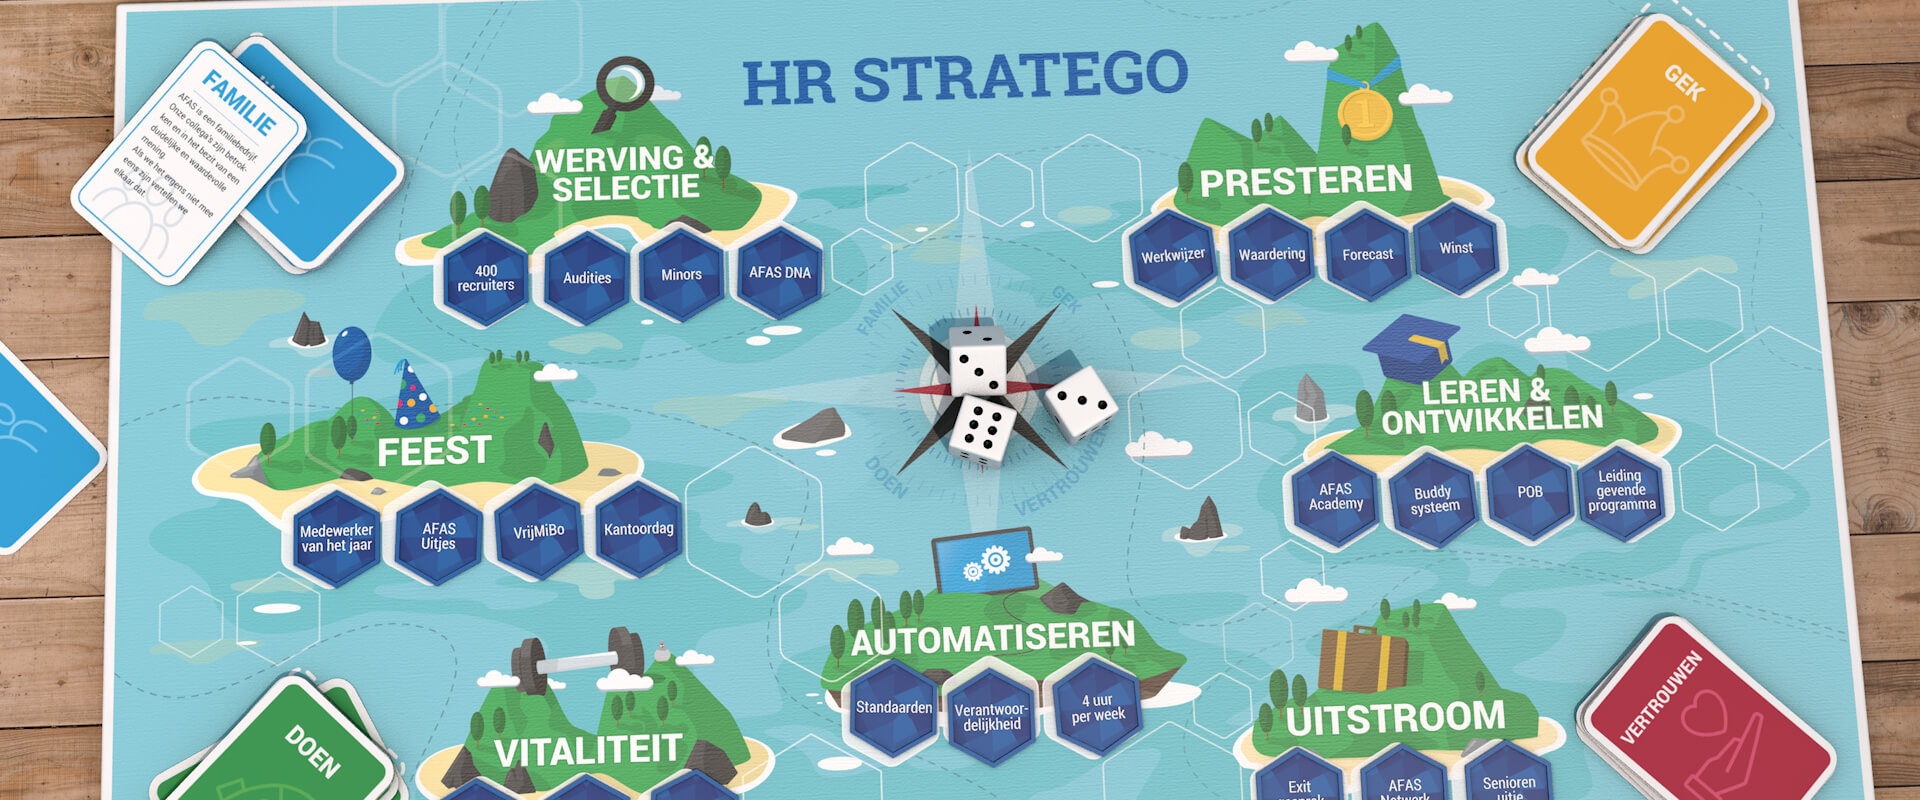 HR Stratego